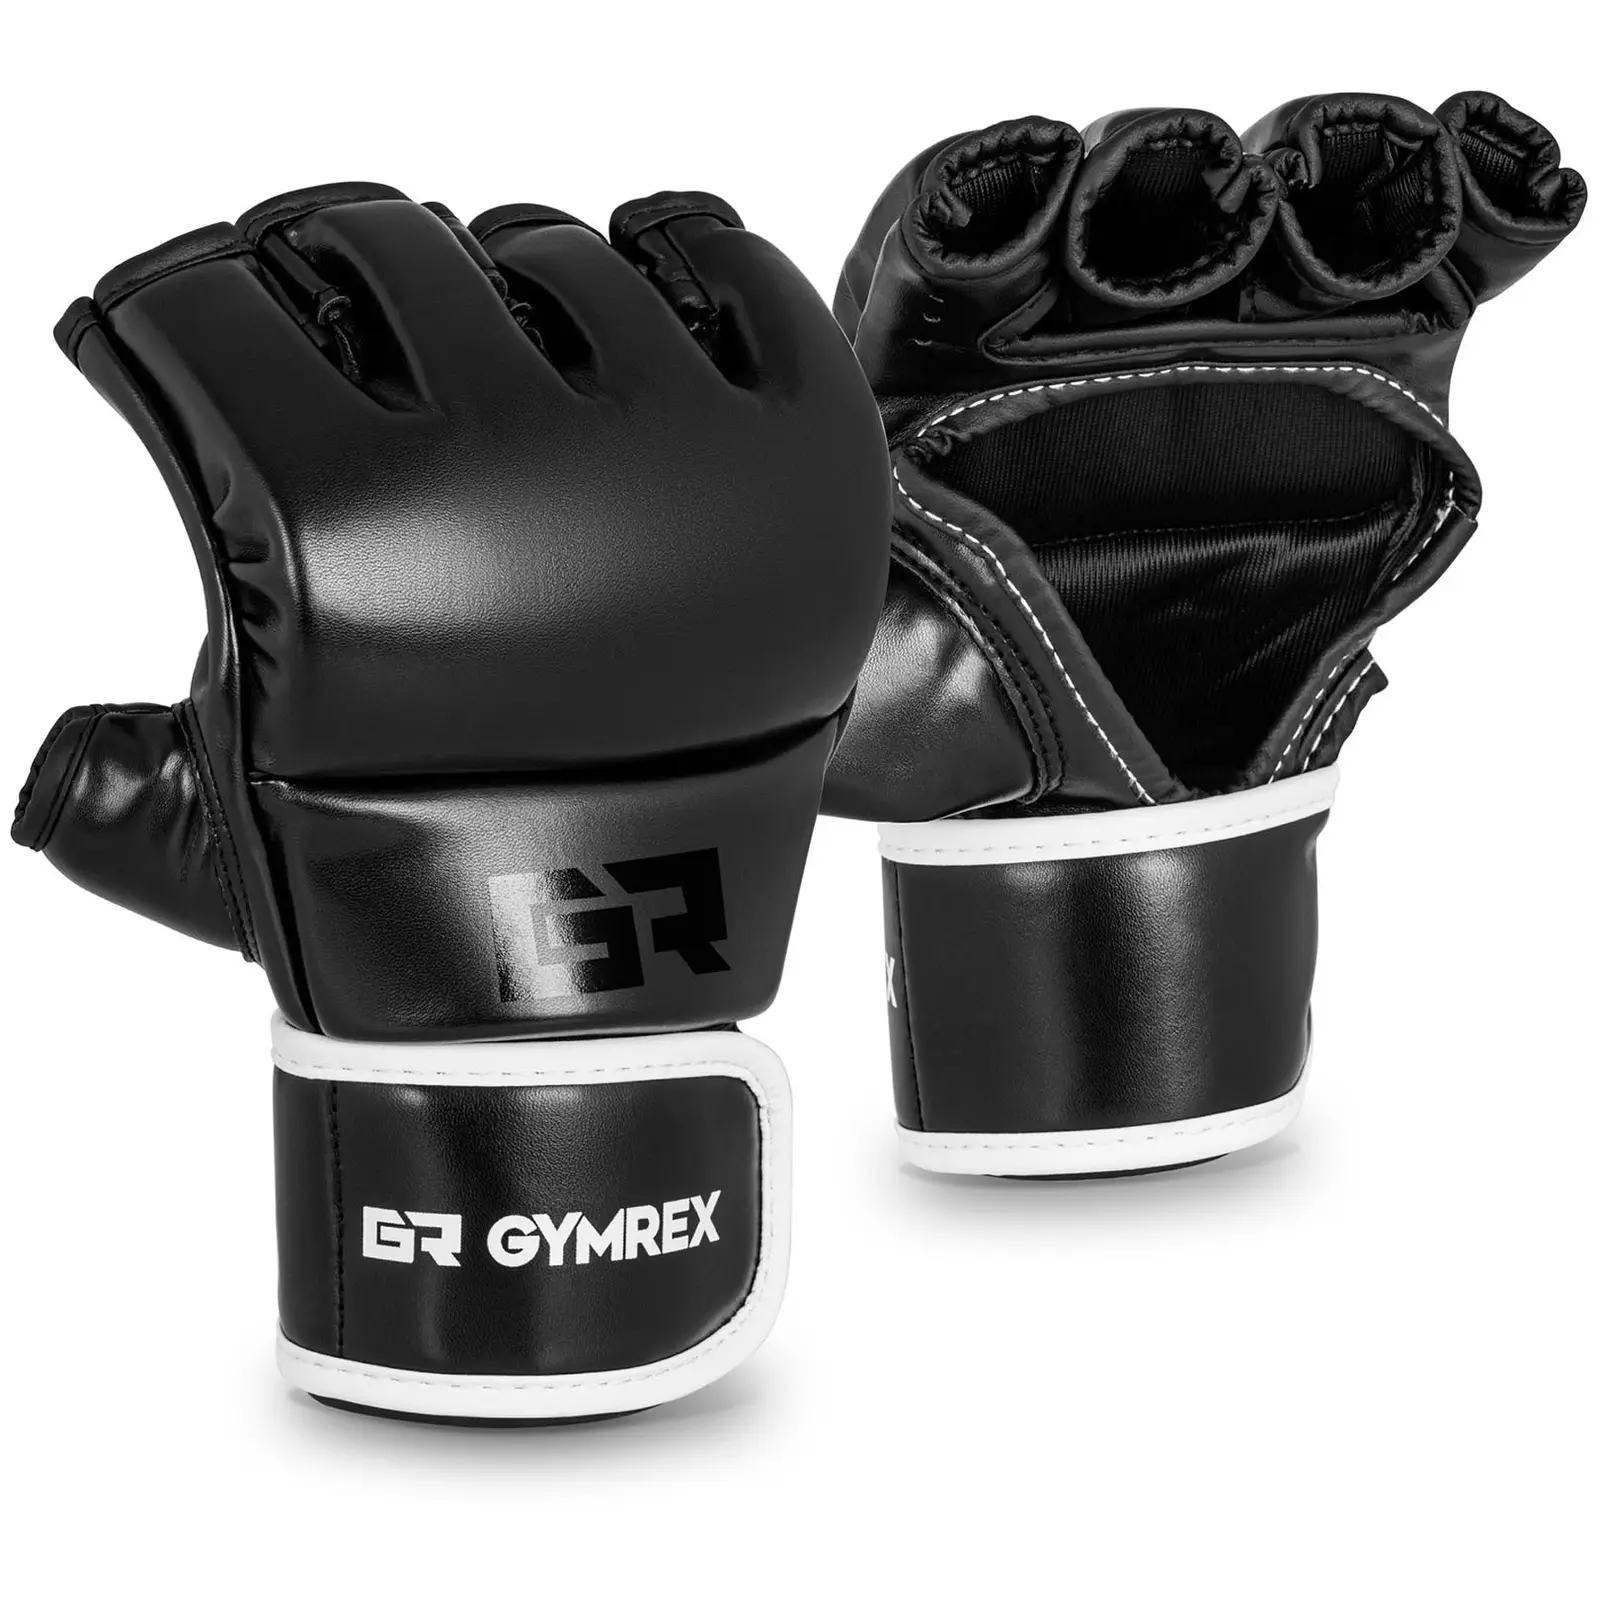 MMA Gloves - size S/M - black